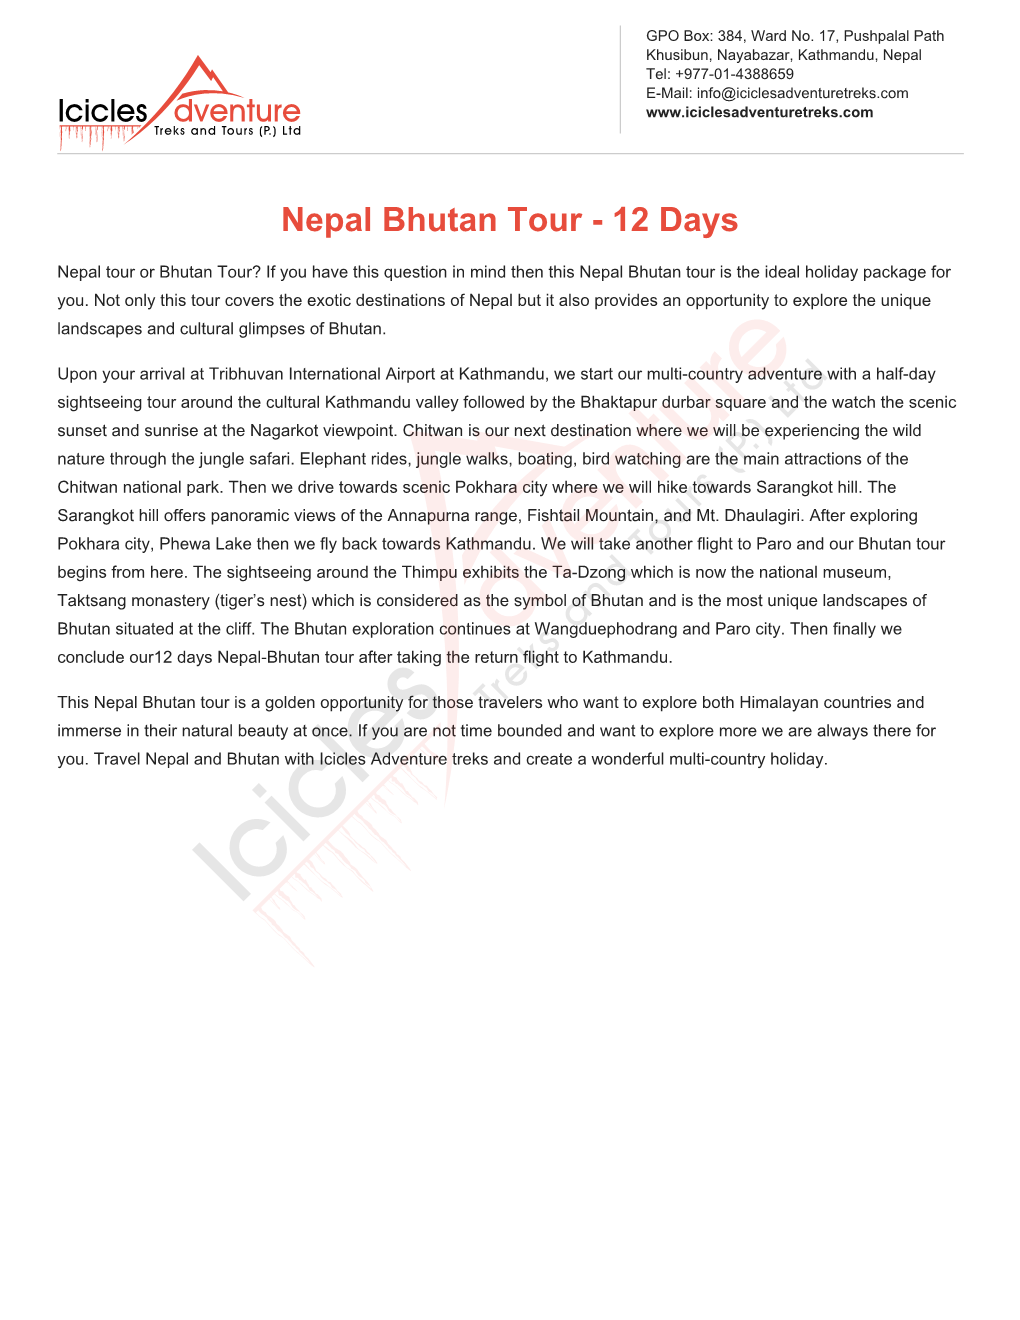 Nepal Bhutan Tour - 12 Days